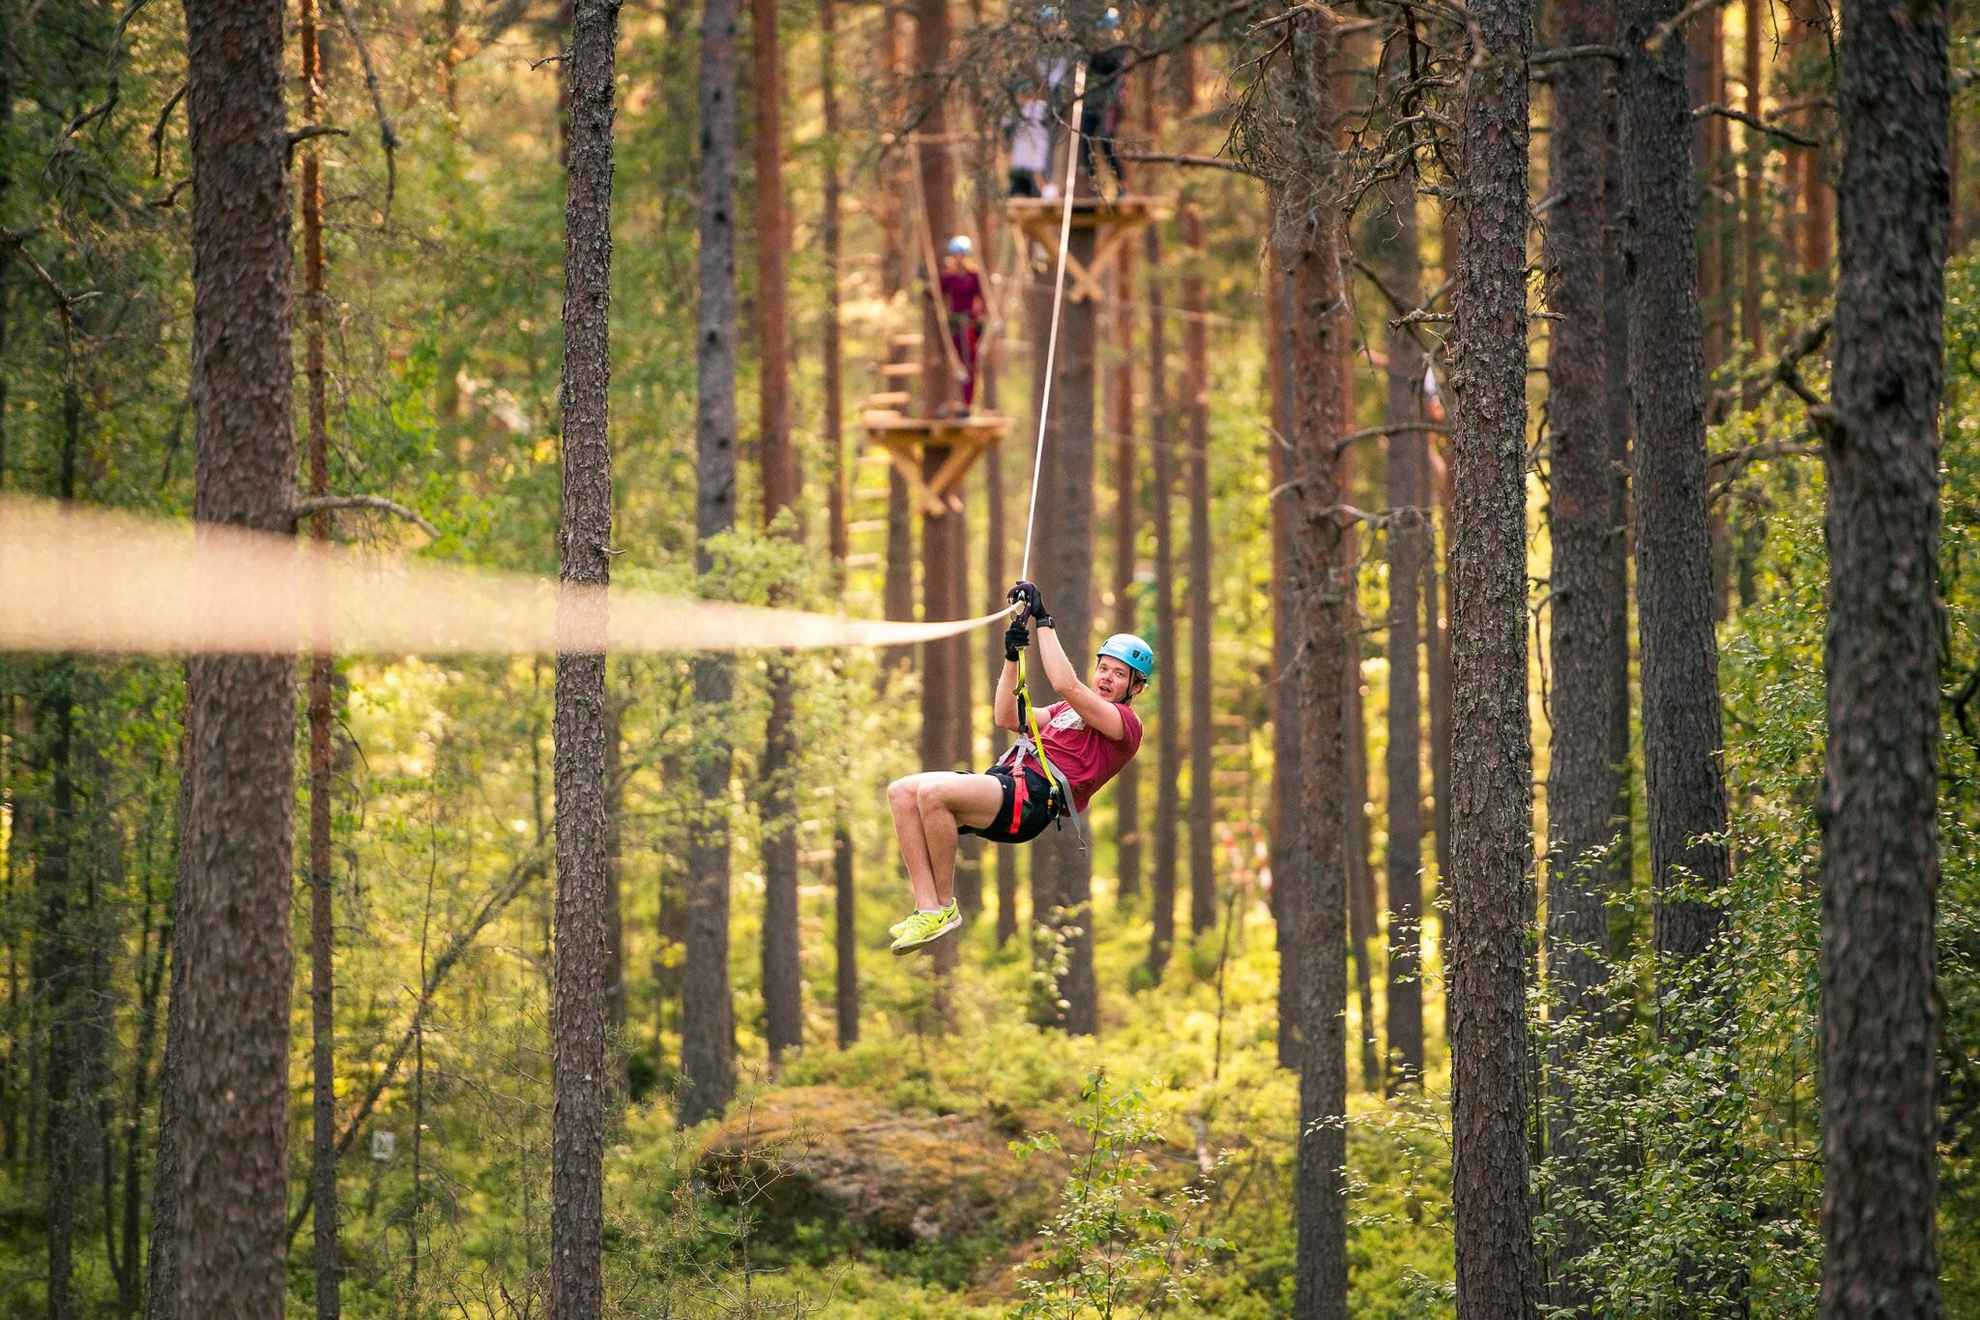 Högt & Lågt climbing park in Gävle